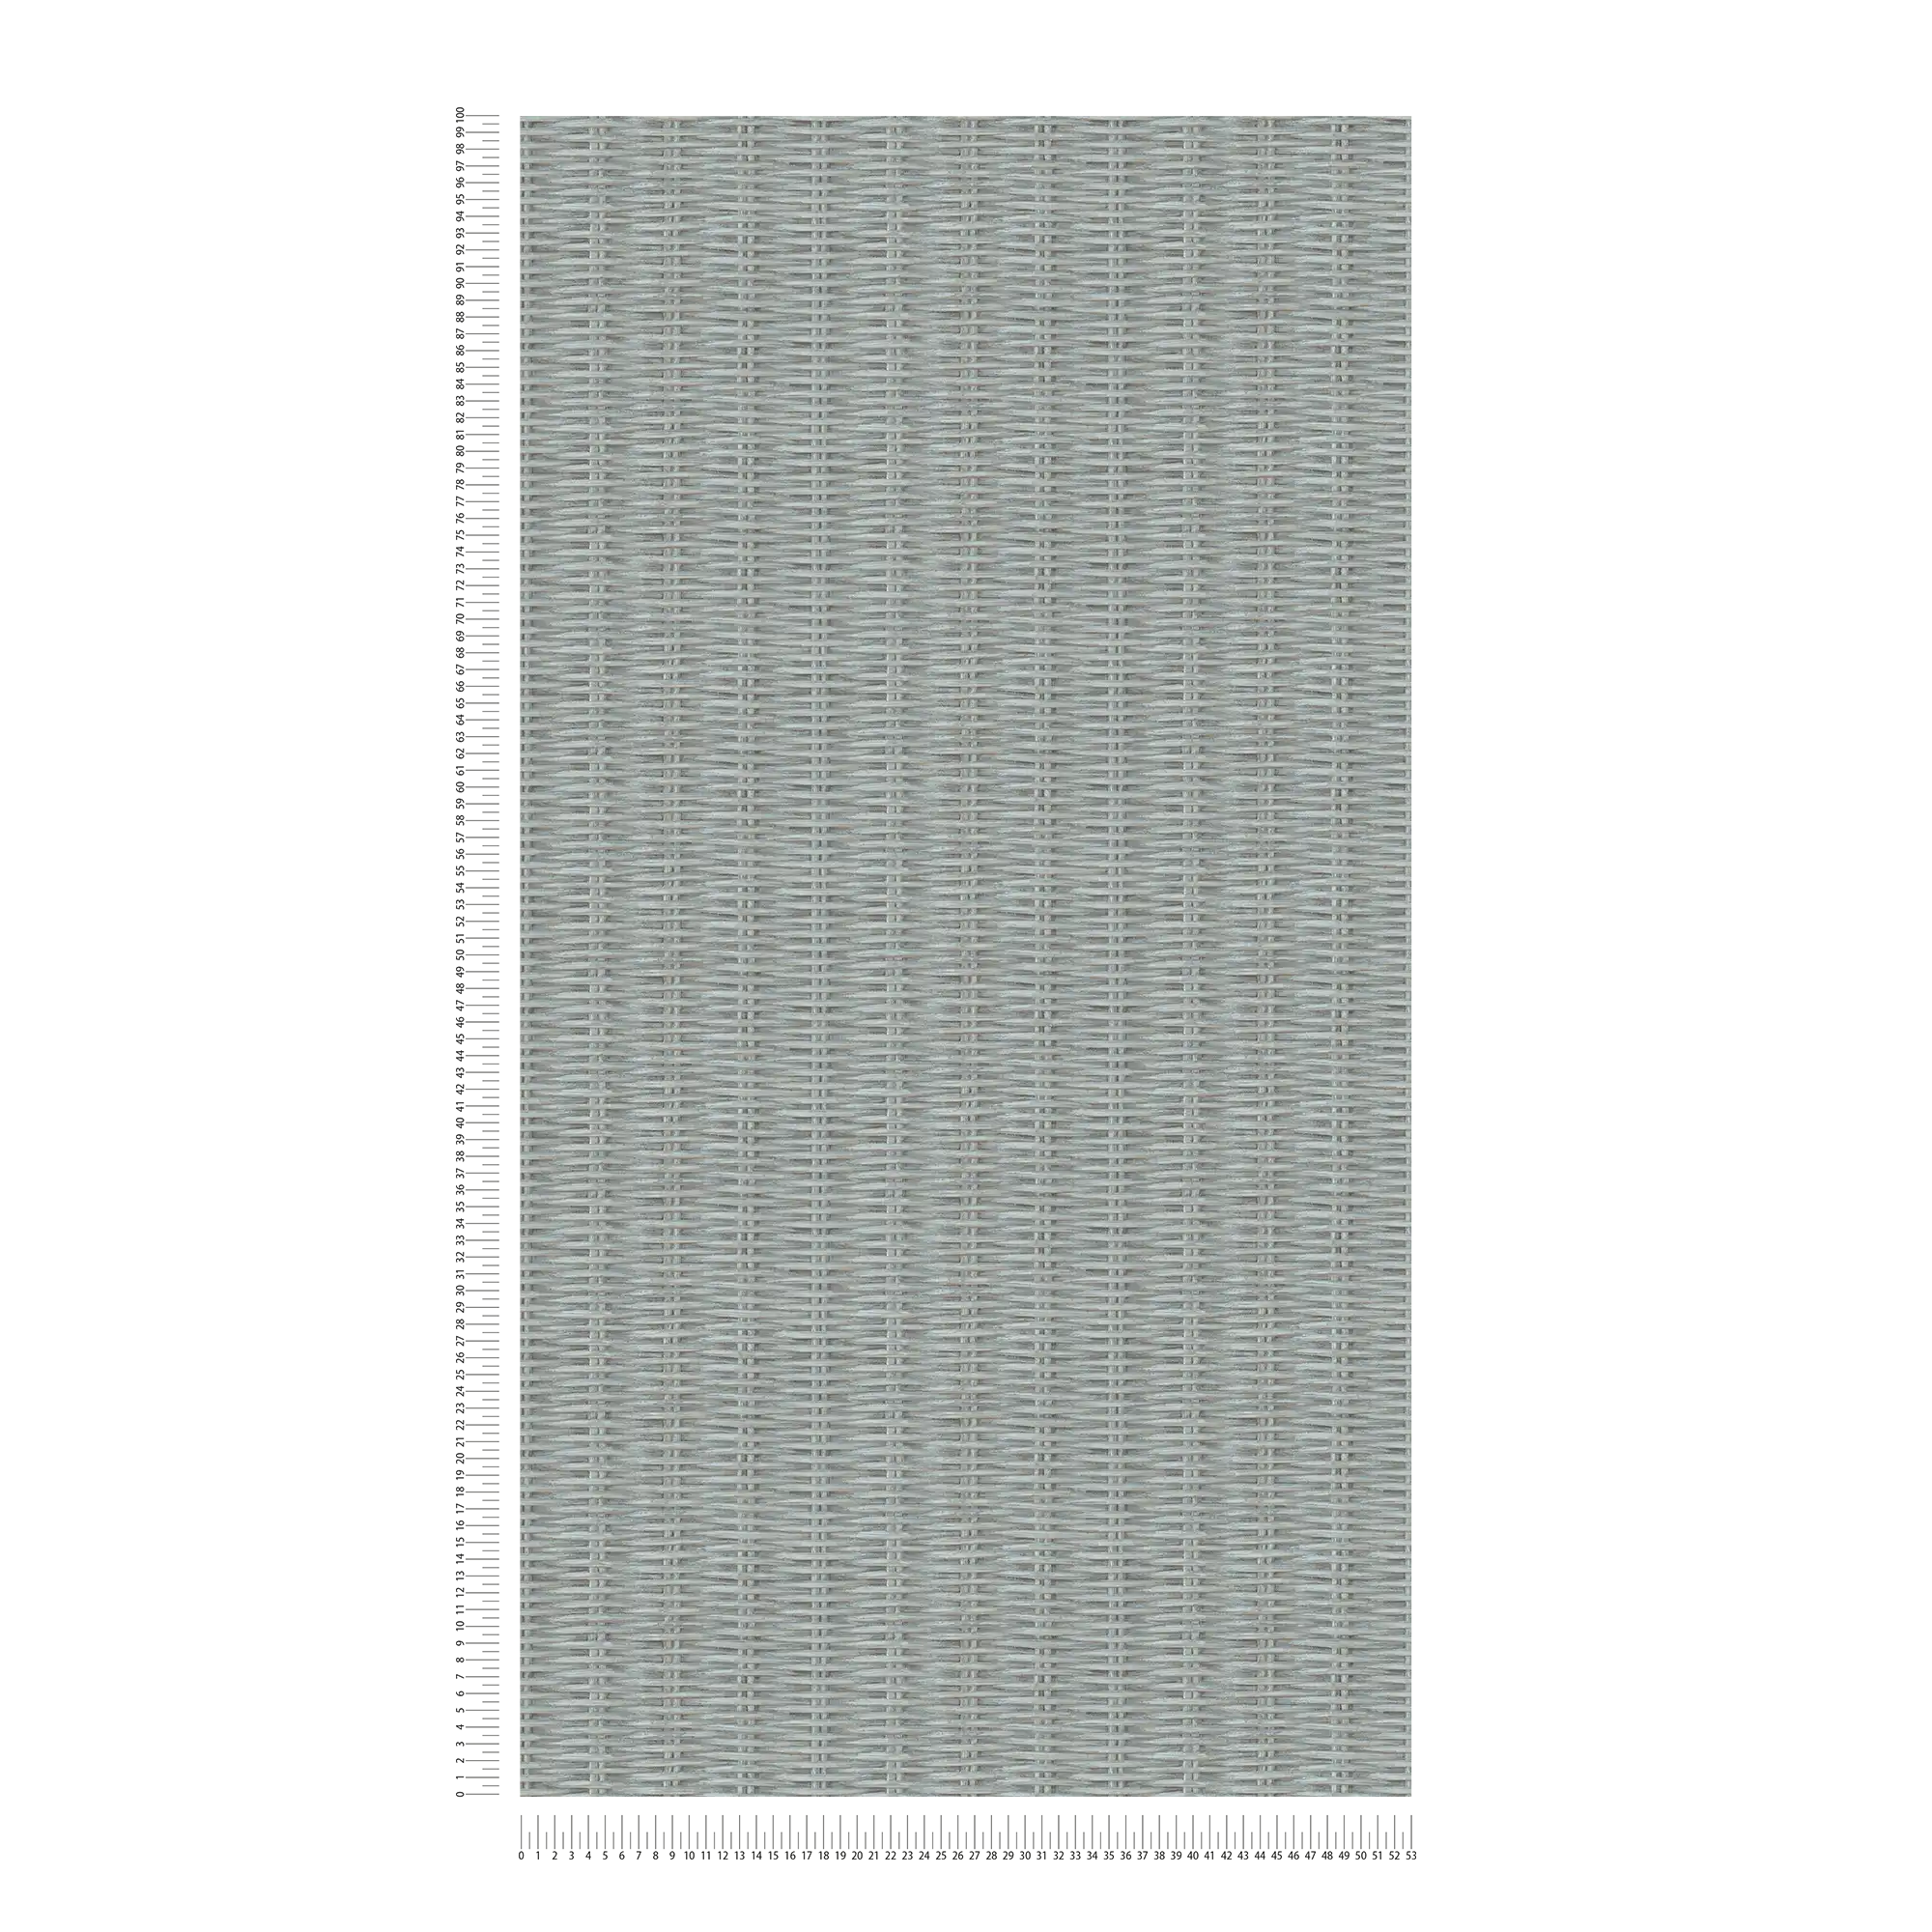             Non-woven wallpaper rattan motif - blue, grey, green
        